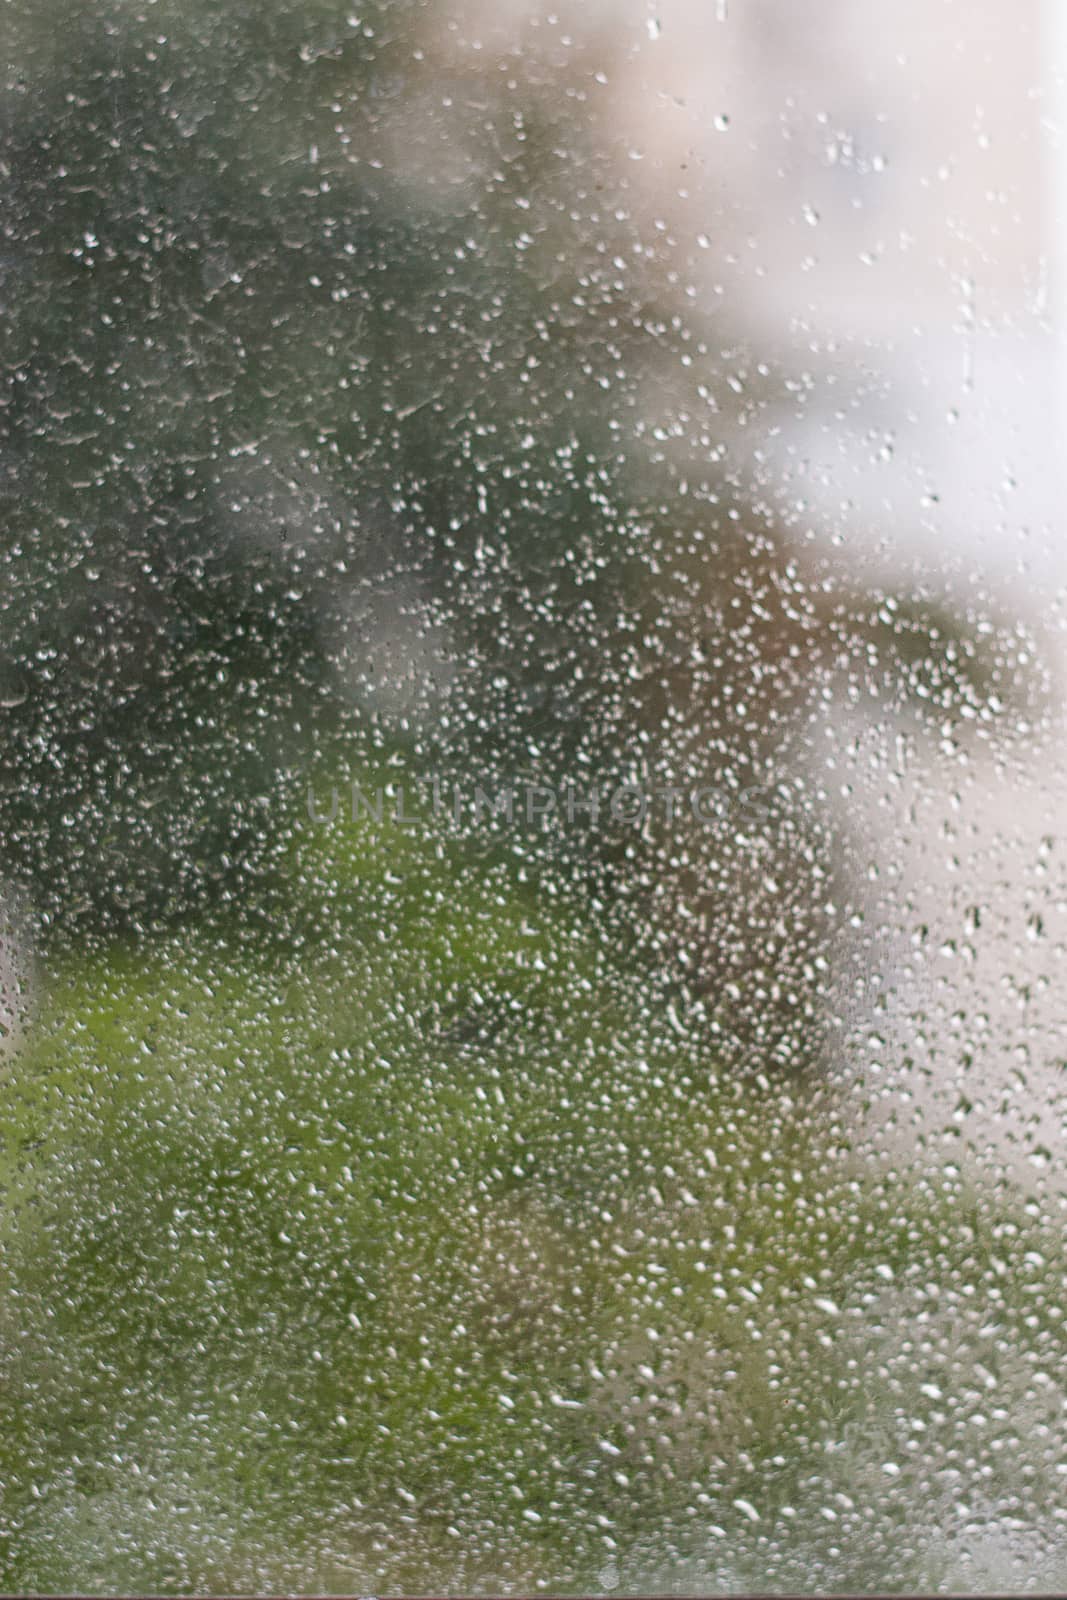 Rain drops on a window by victosha